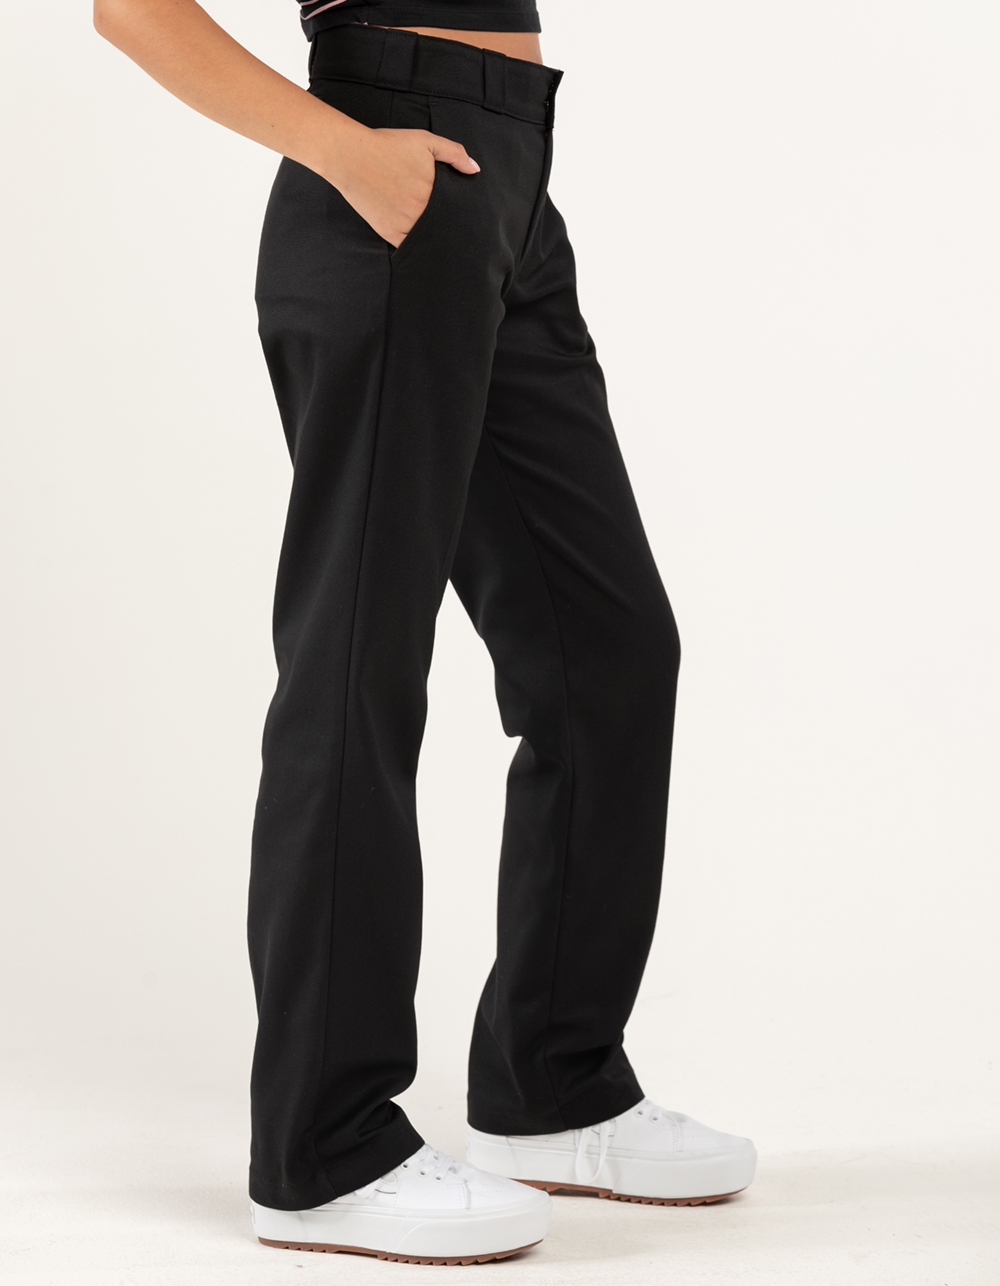 Dickies Women's Original 774 Work Pants - Black